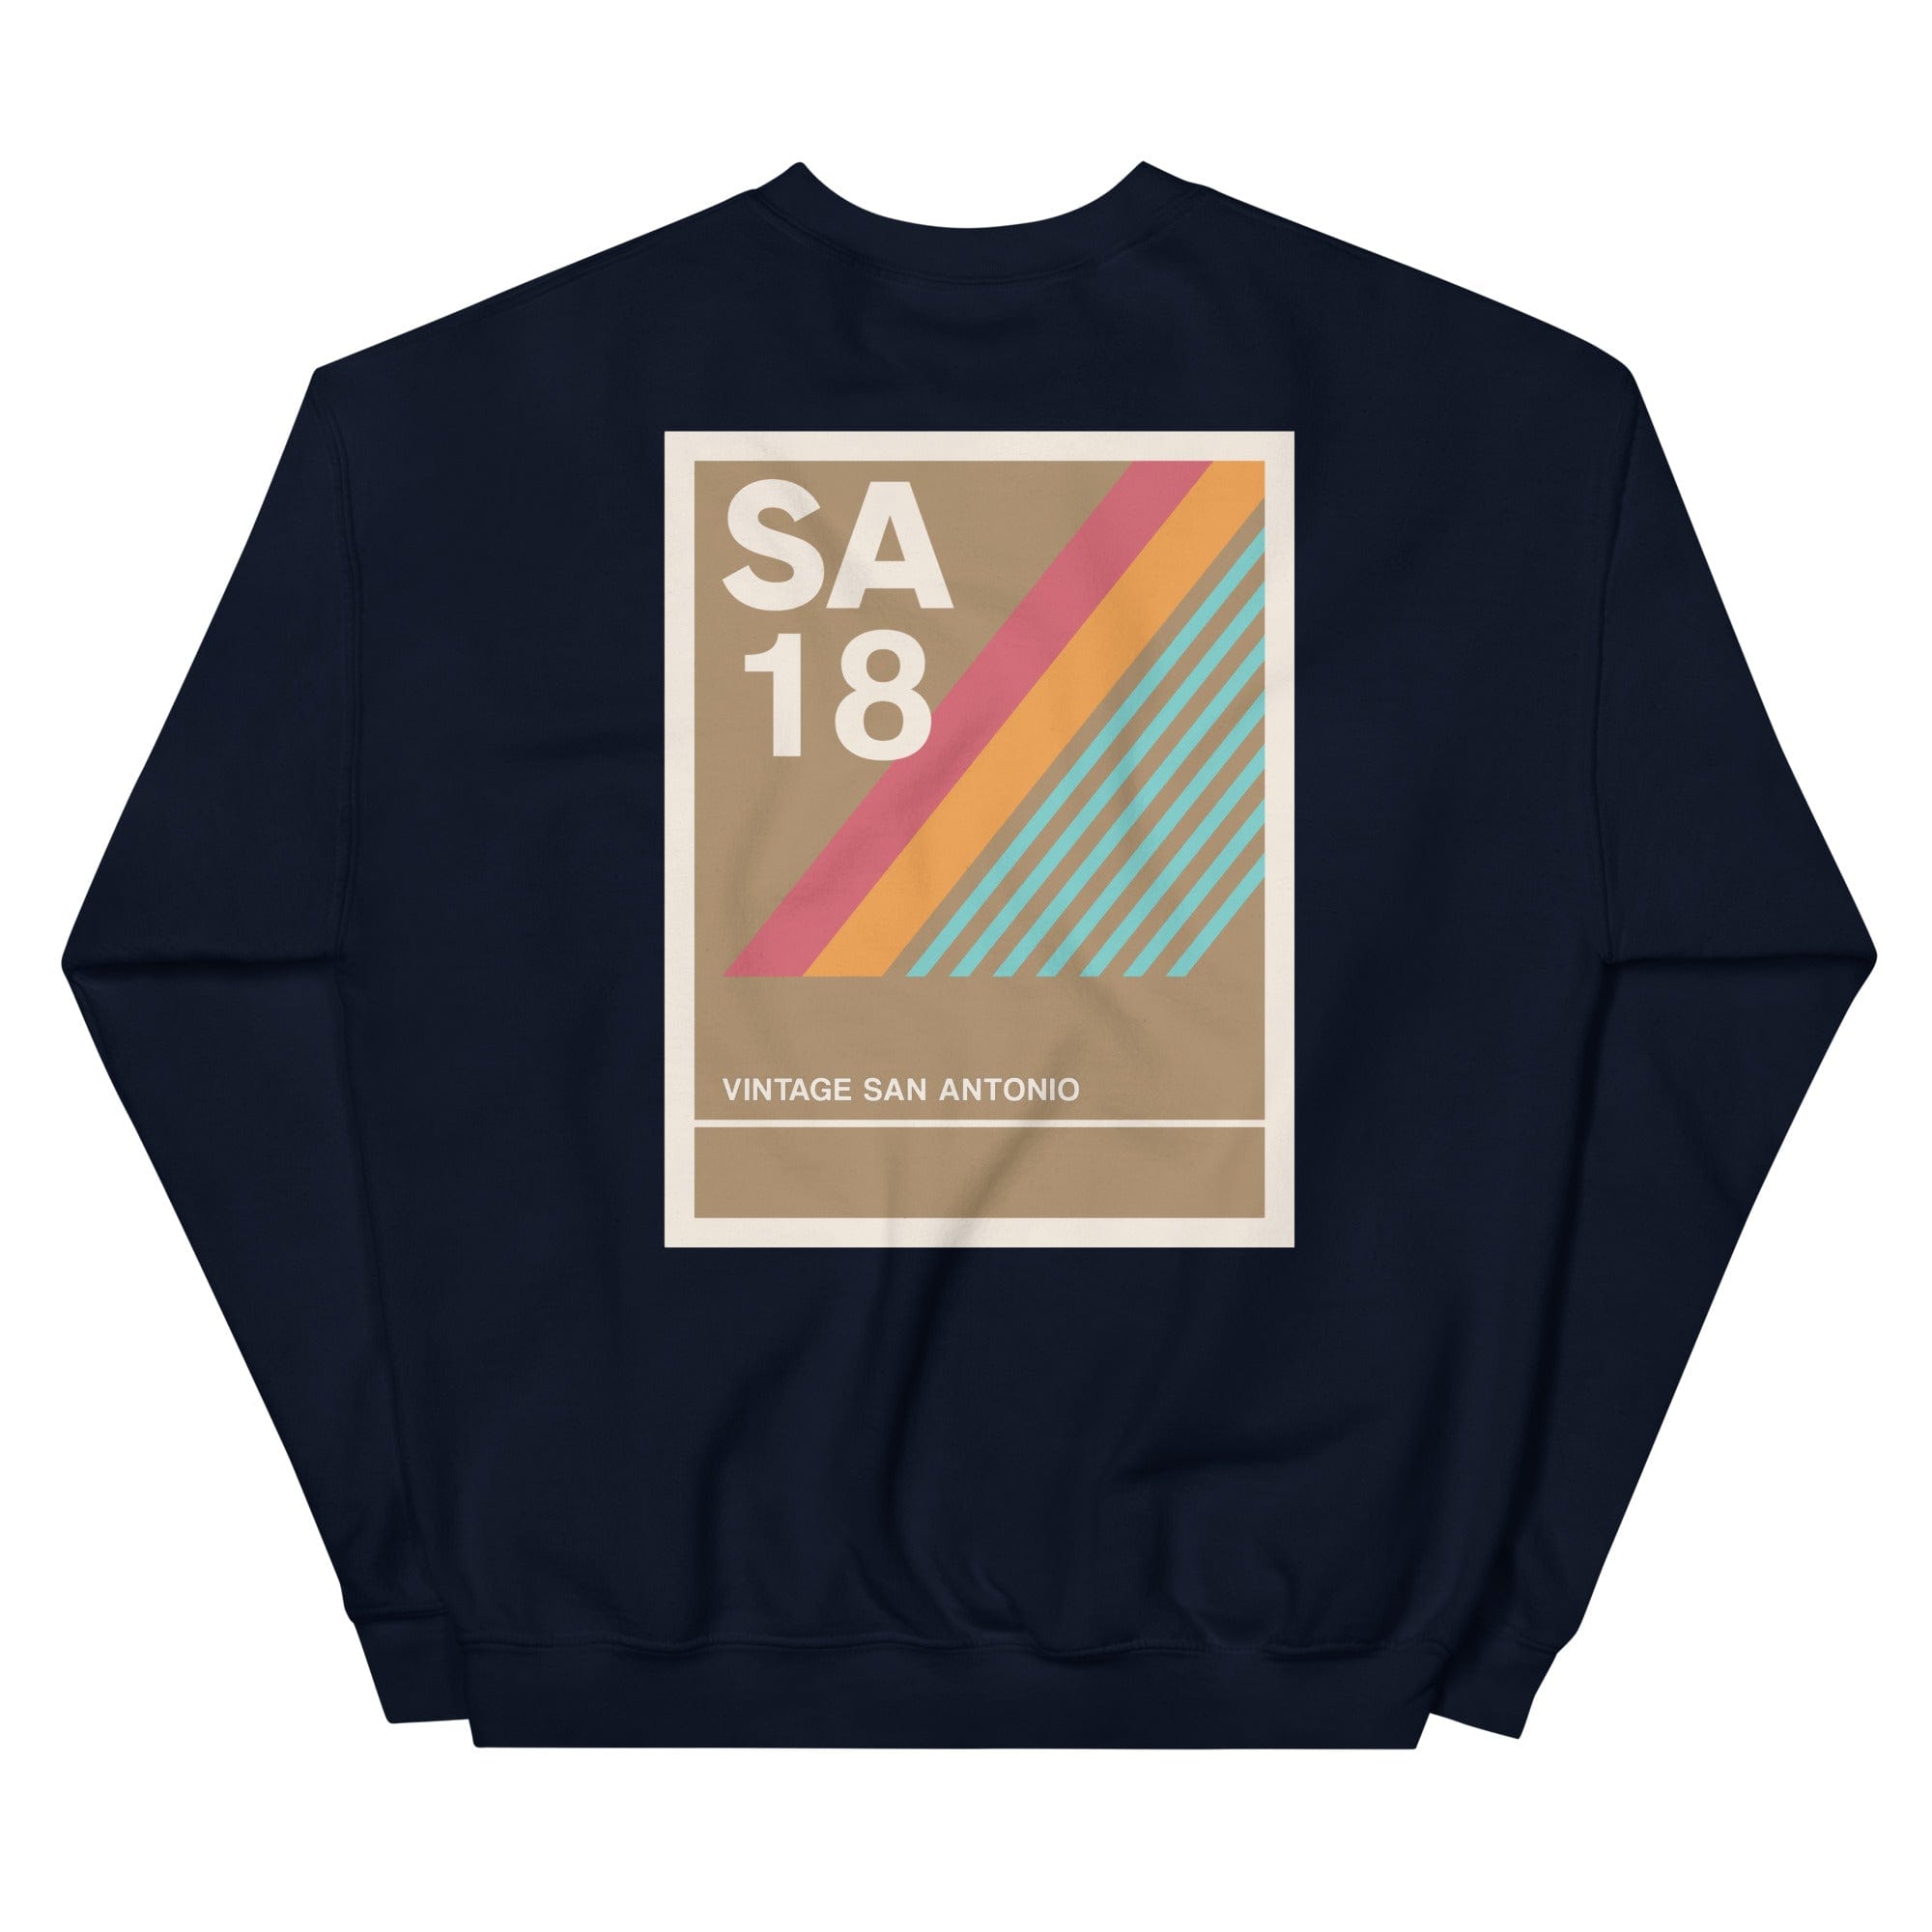 City Shirt Co Vintage San Antonio Sweatshirt